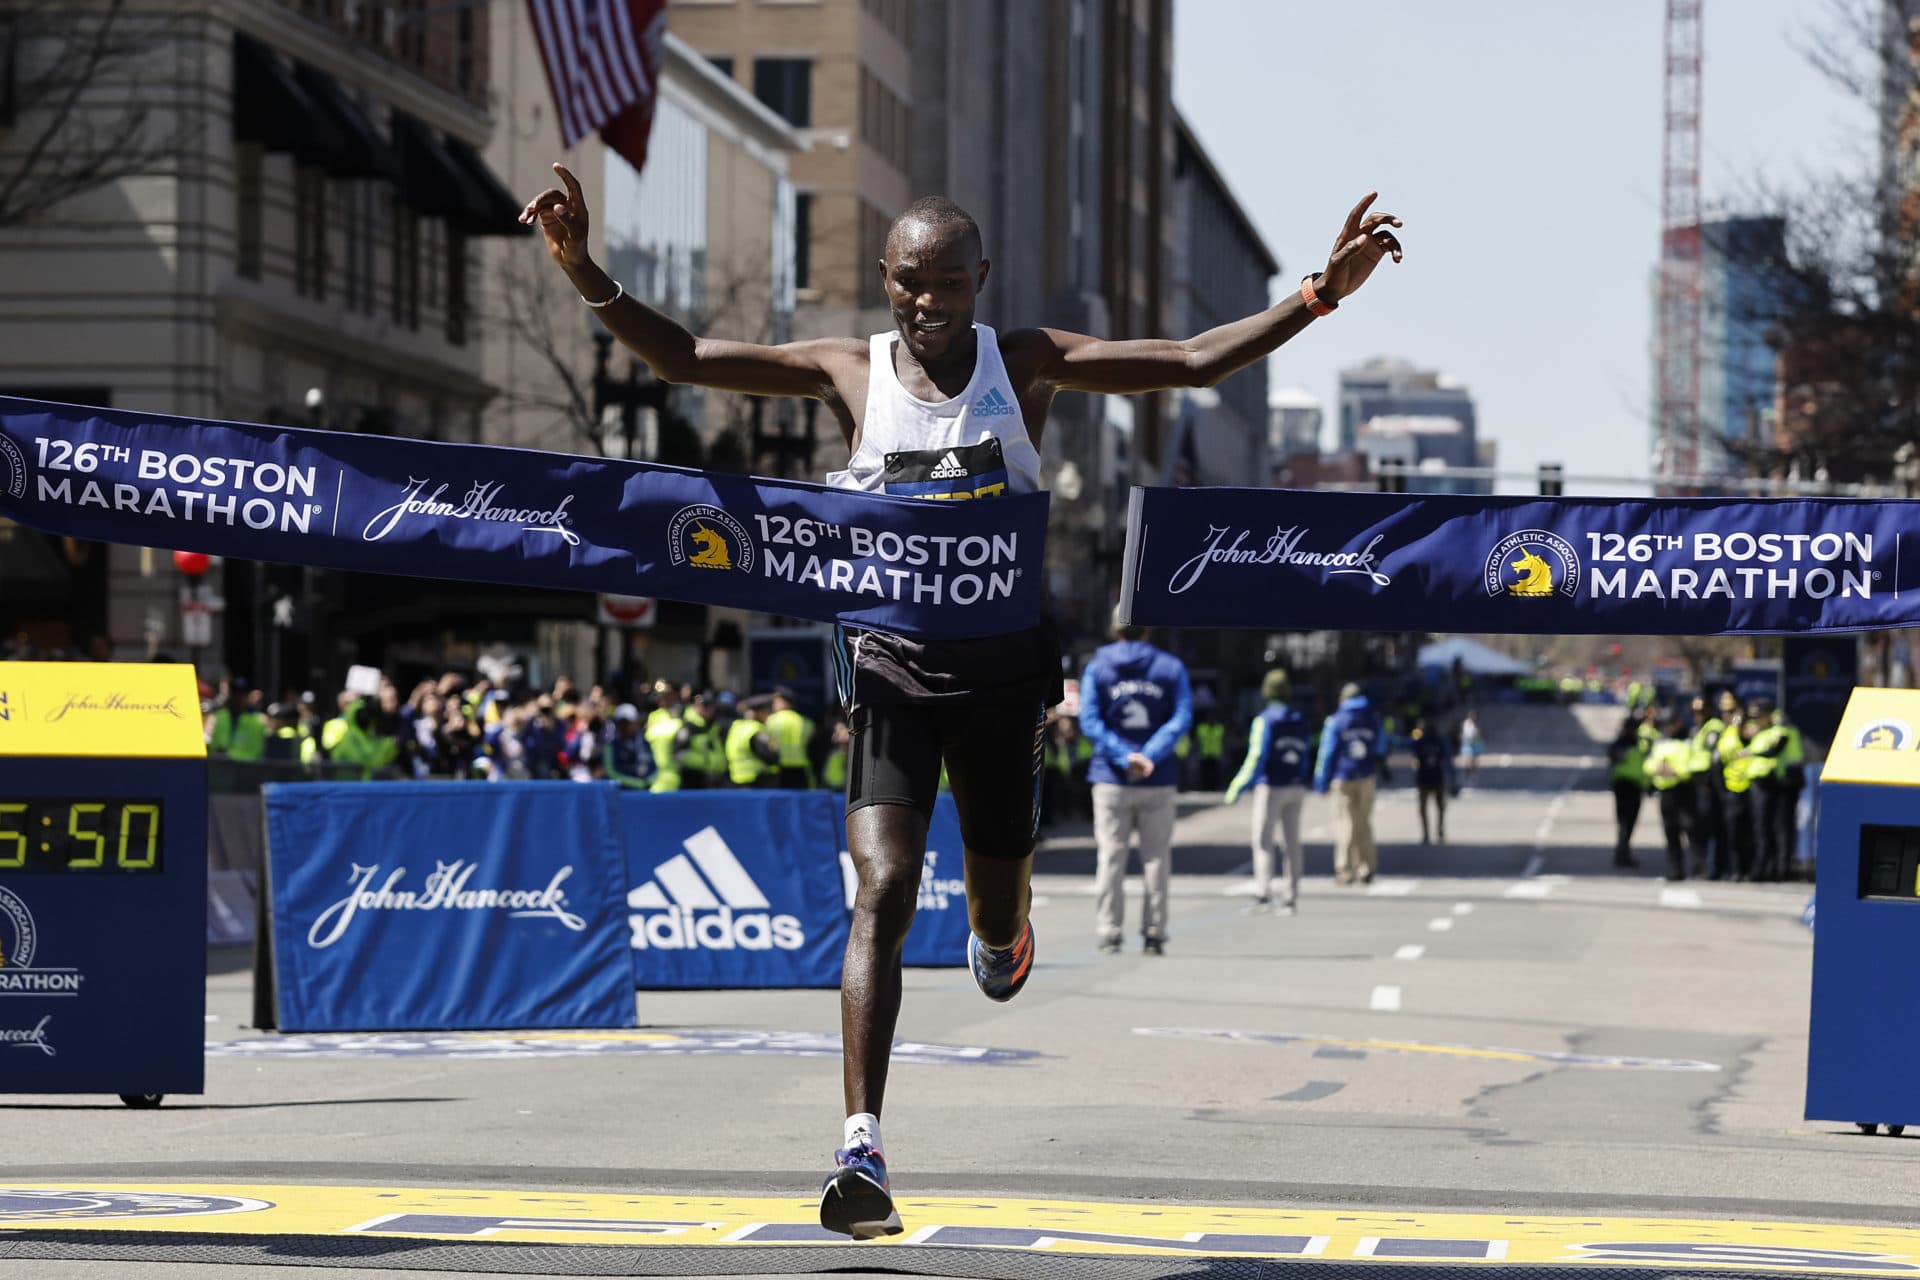 Evans Chebet, of Kenya, hits the tape to win the 126th Boston Marathon. (Winslow Townson/AP)